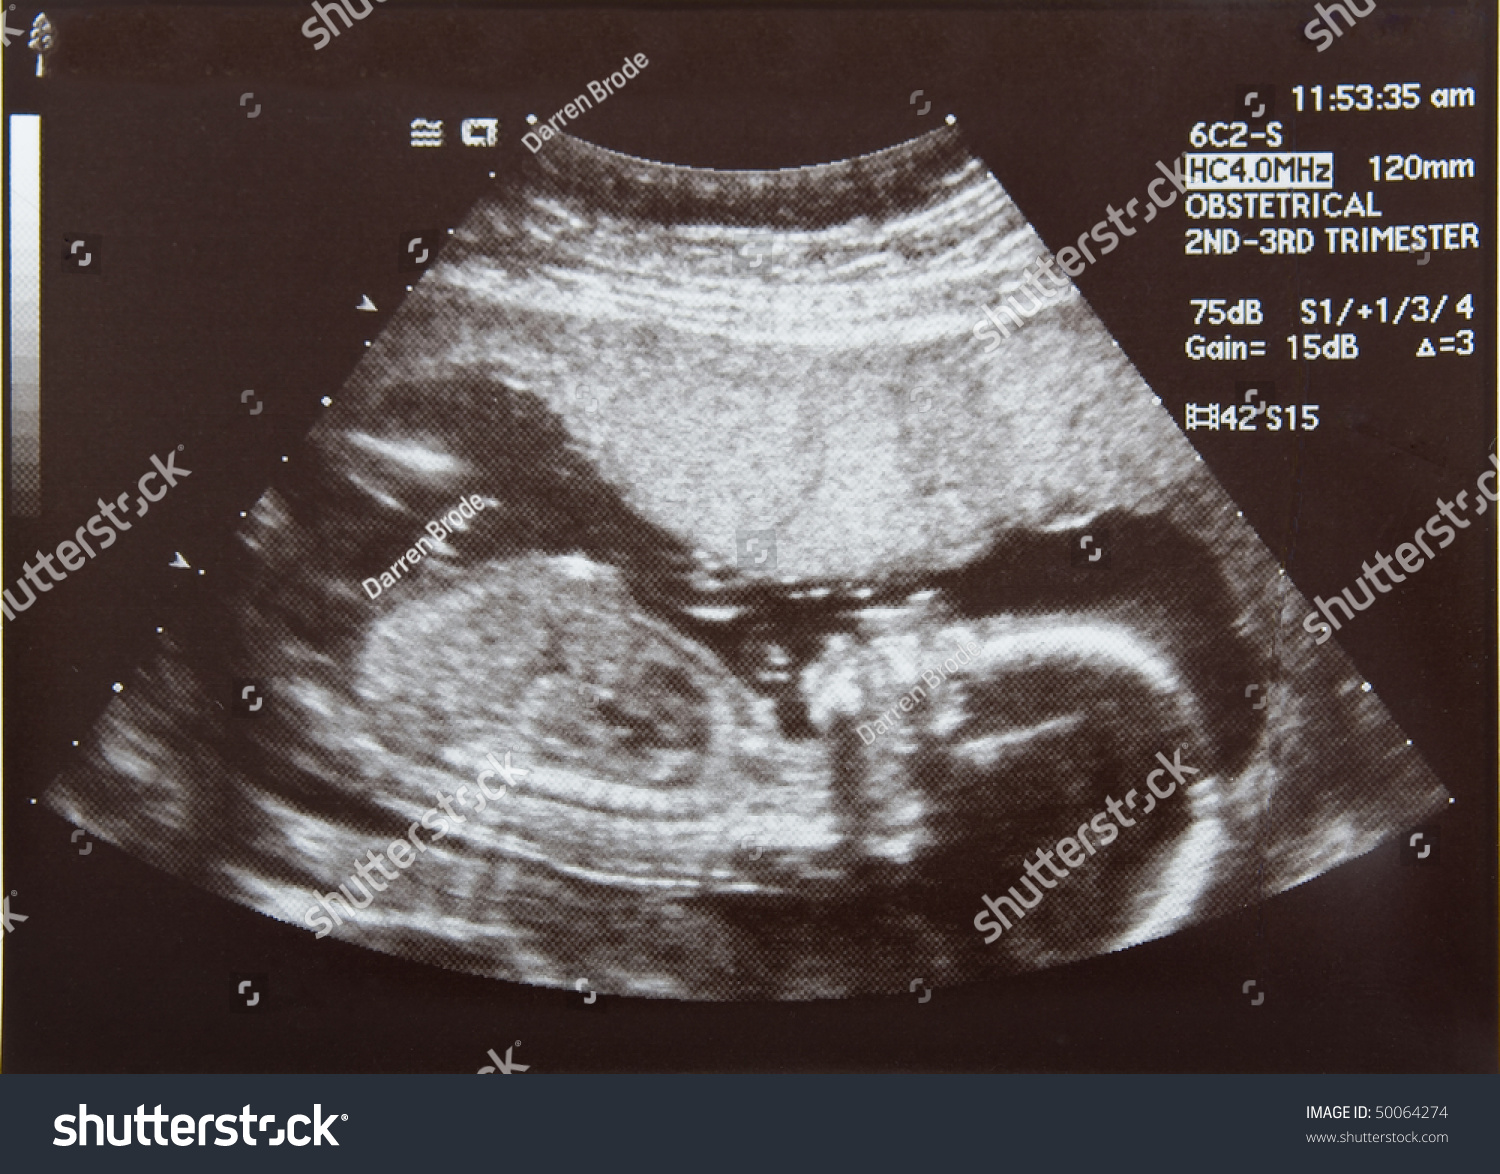 4 Months Pregnant Ultrasound